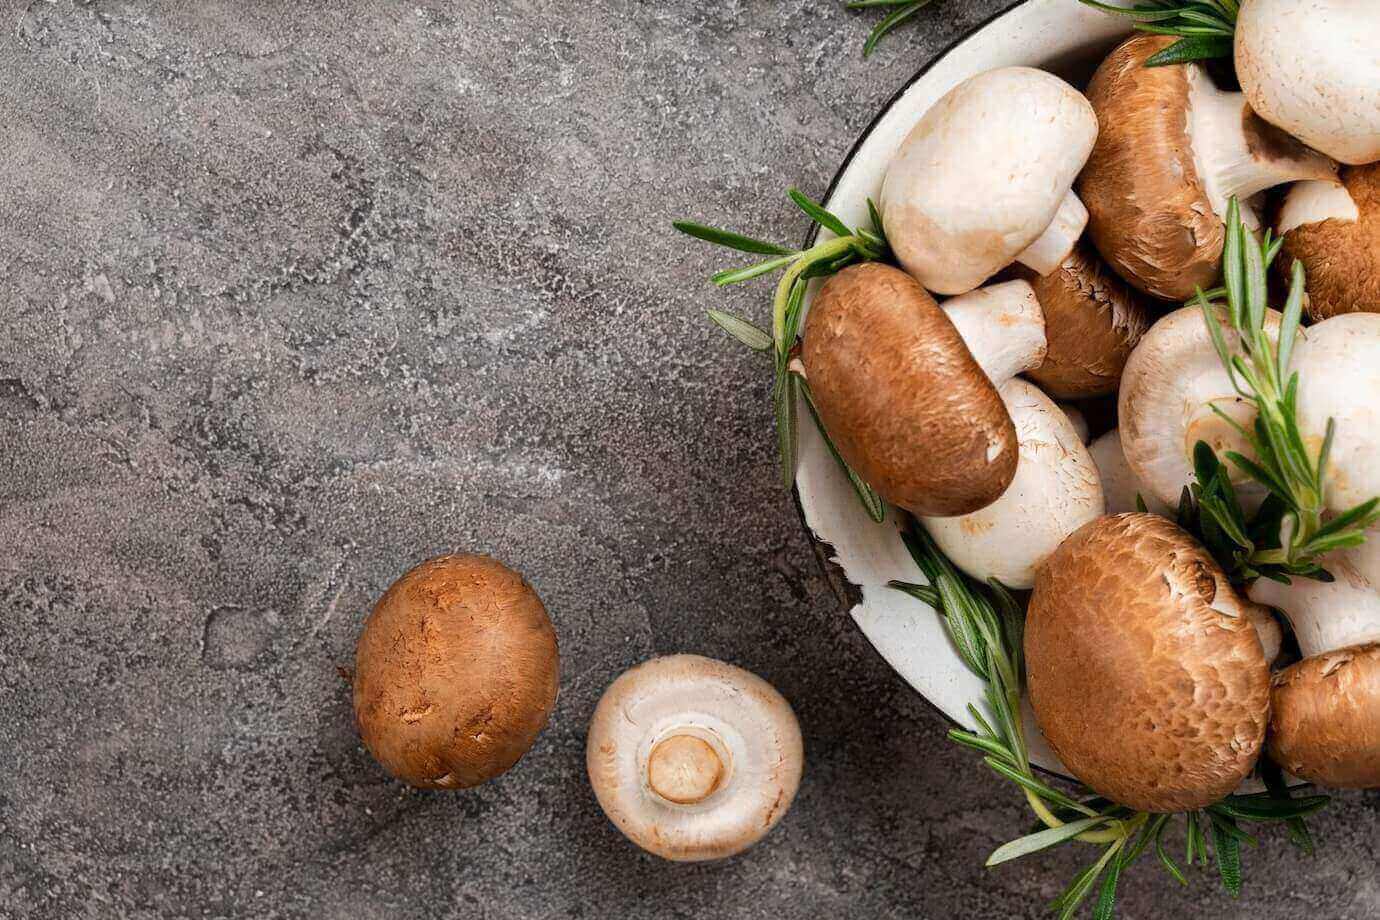 What are the Negative Effects of Portobello Mushrooms?